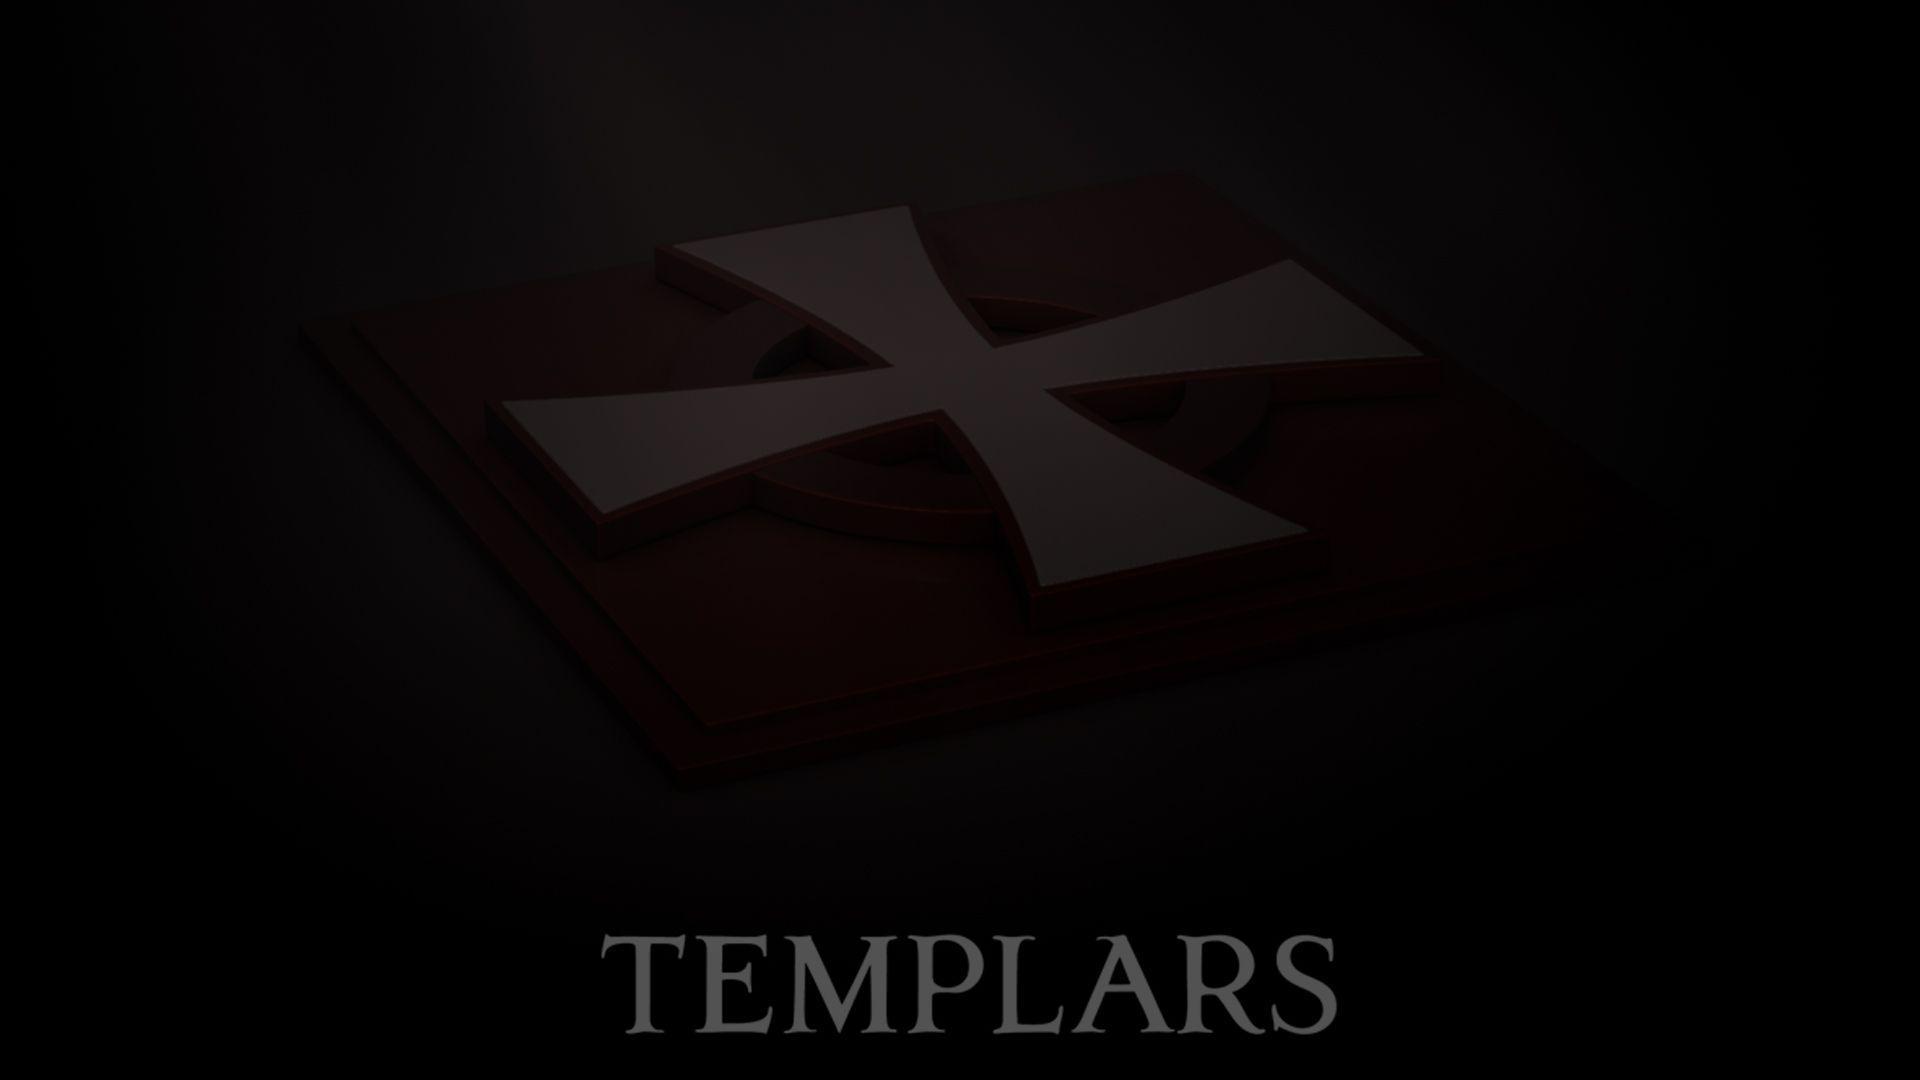 My Templar wallpaper.